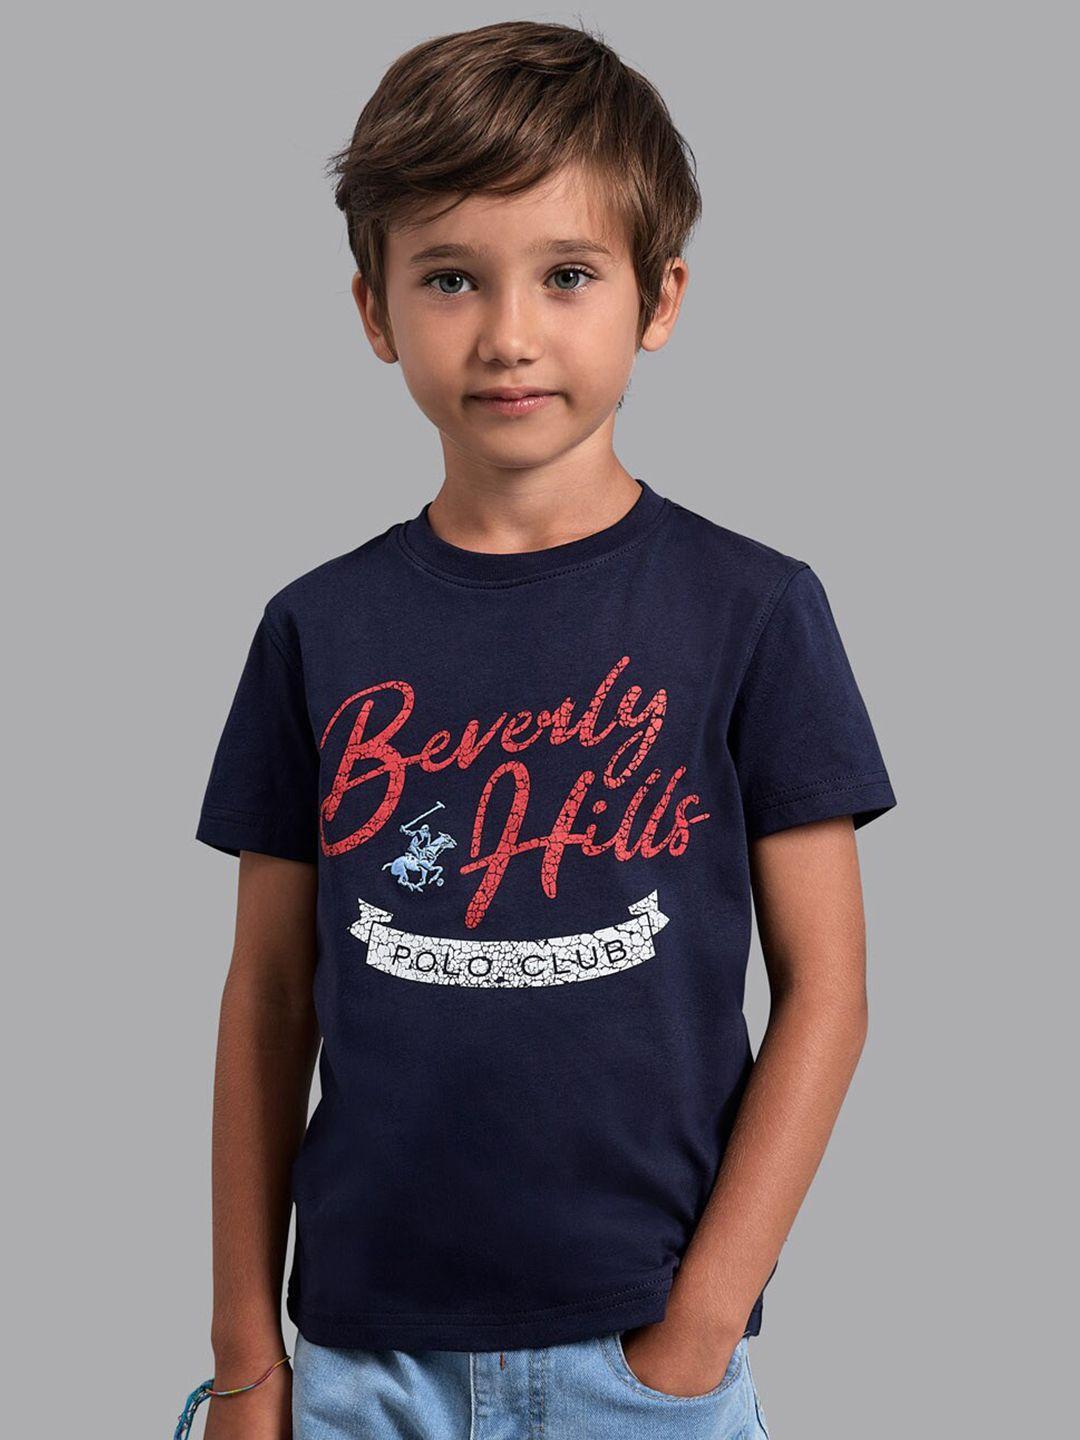 beverly hills polo club boys navy blue printed t-shirt